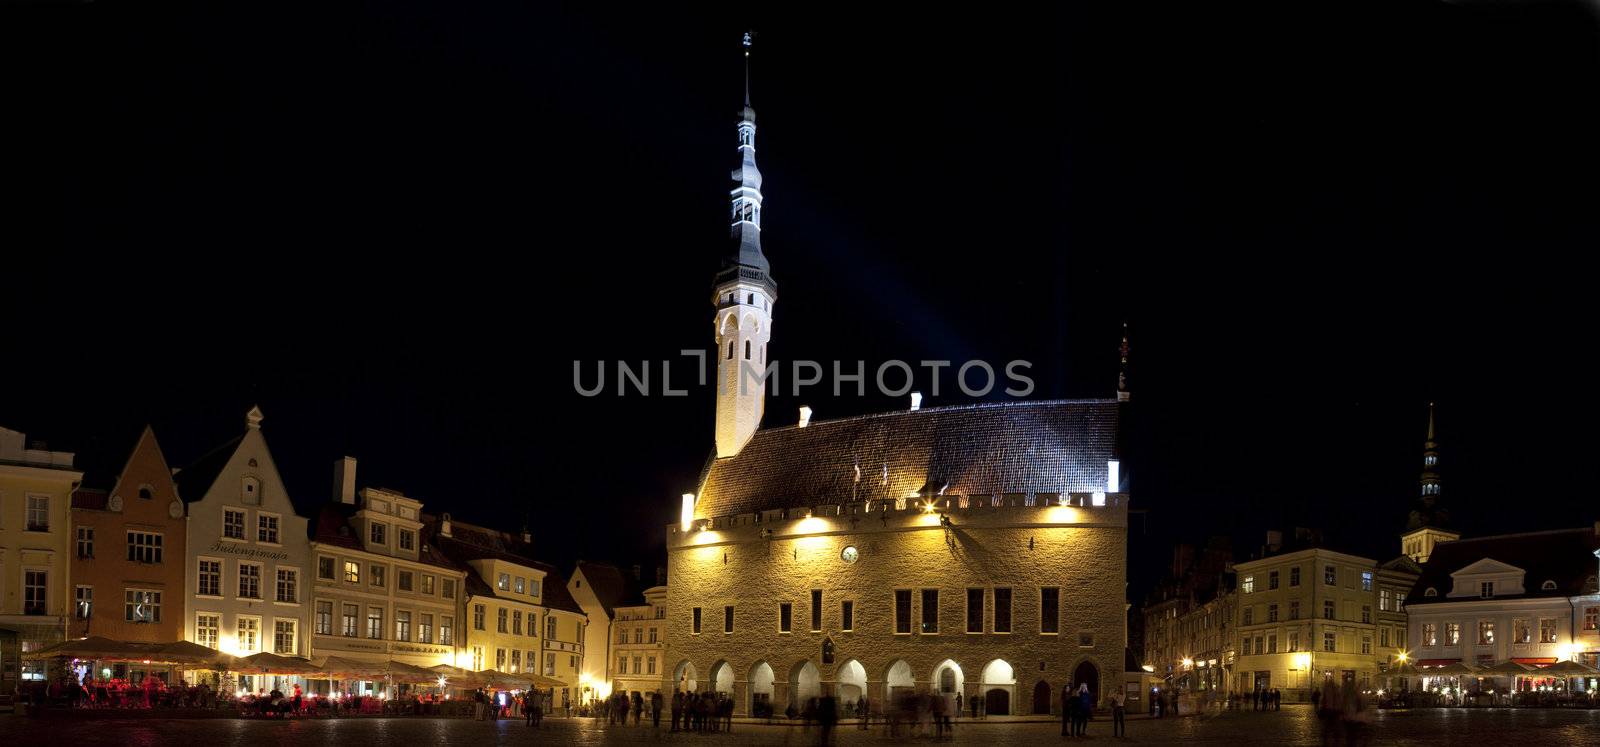 Tallin Town Hall Square at Night, Estonia.